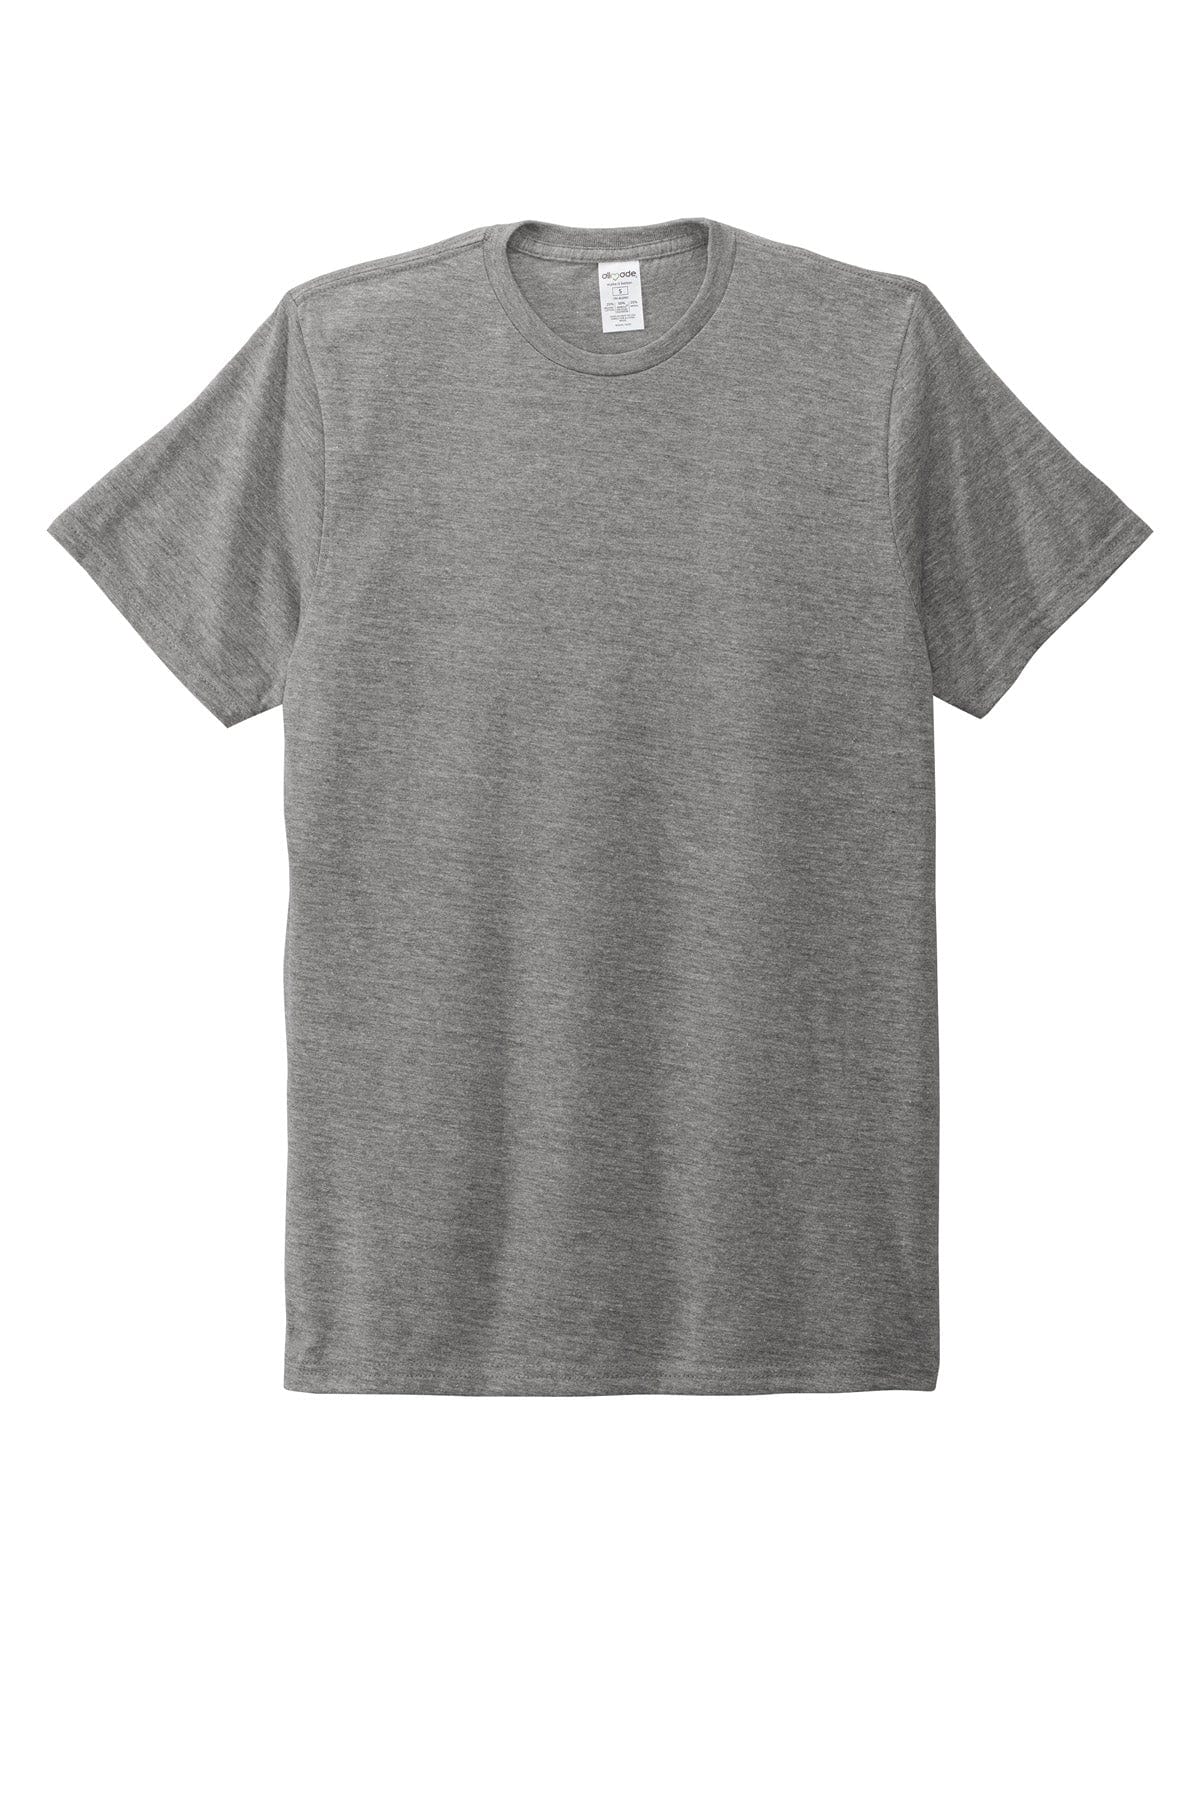 XS / Aluminum Grey Custom Allmade Unisex Tri-Blend T-Shirt